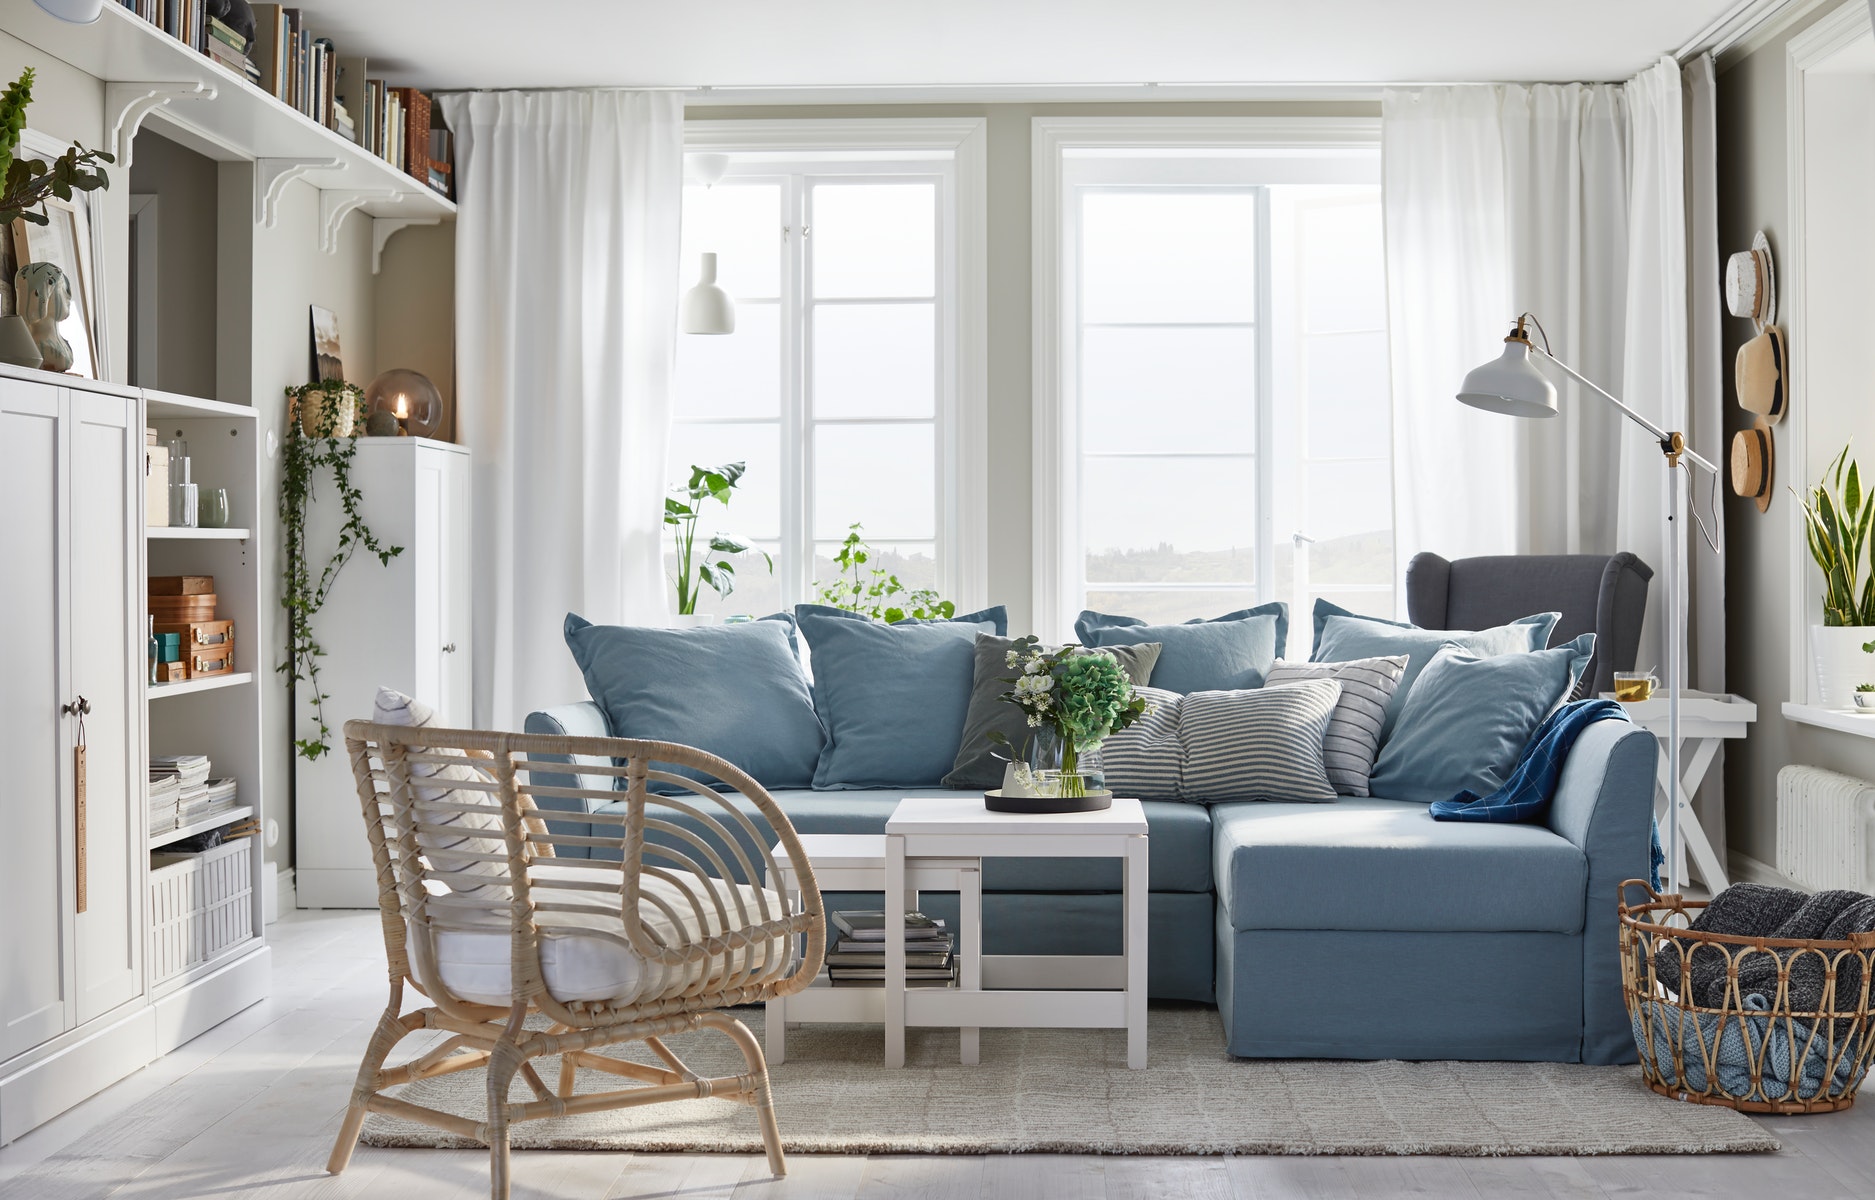 Use Comfortable and Beautiful Furniture